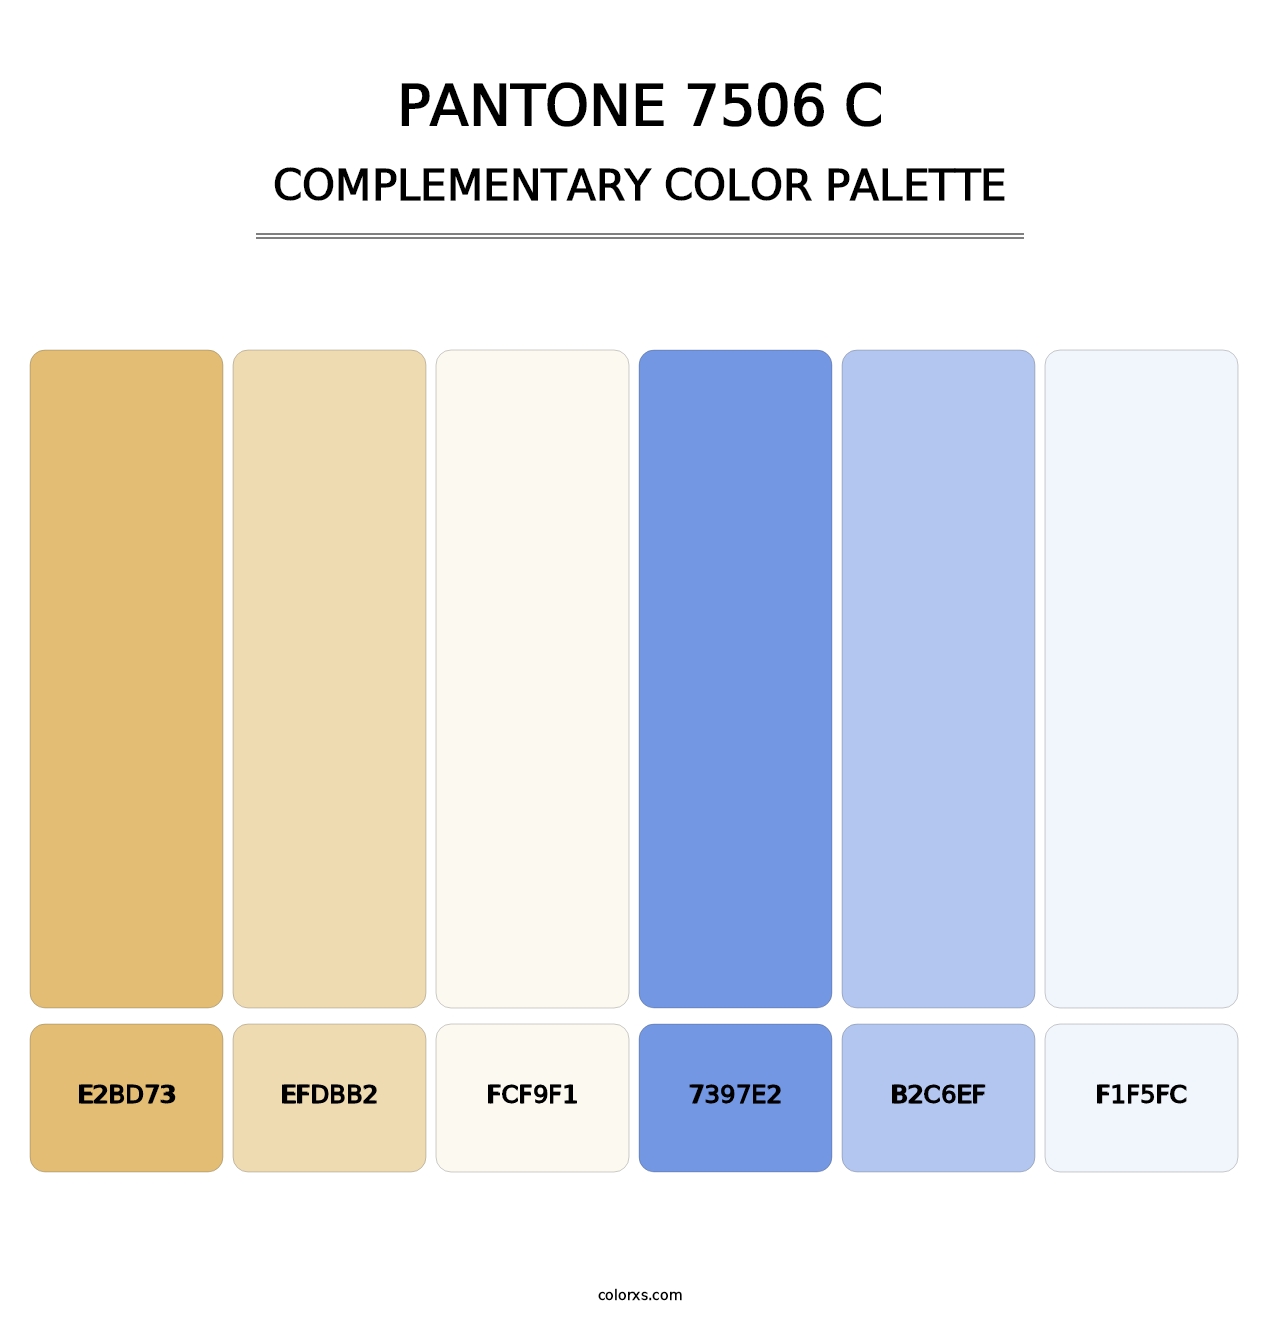 PANTONE 7506 C - Complementary Color Palette